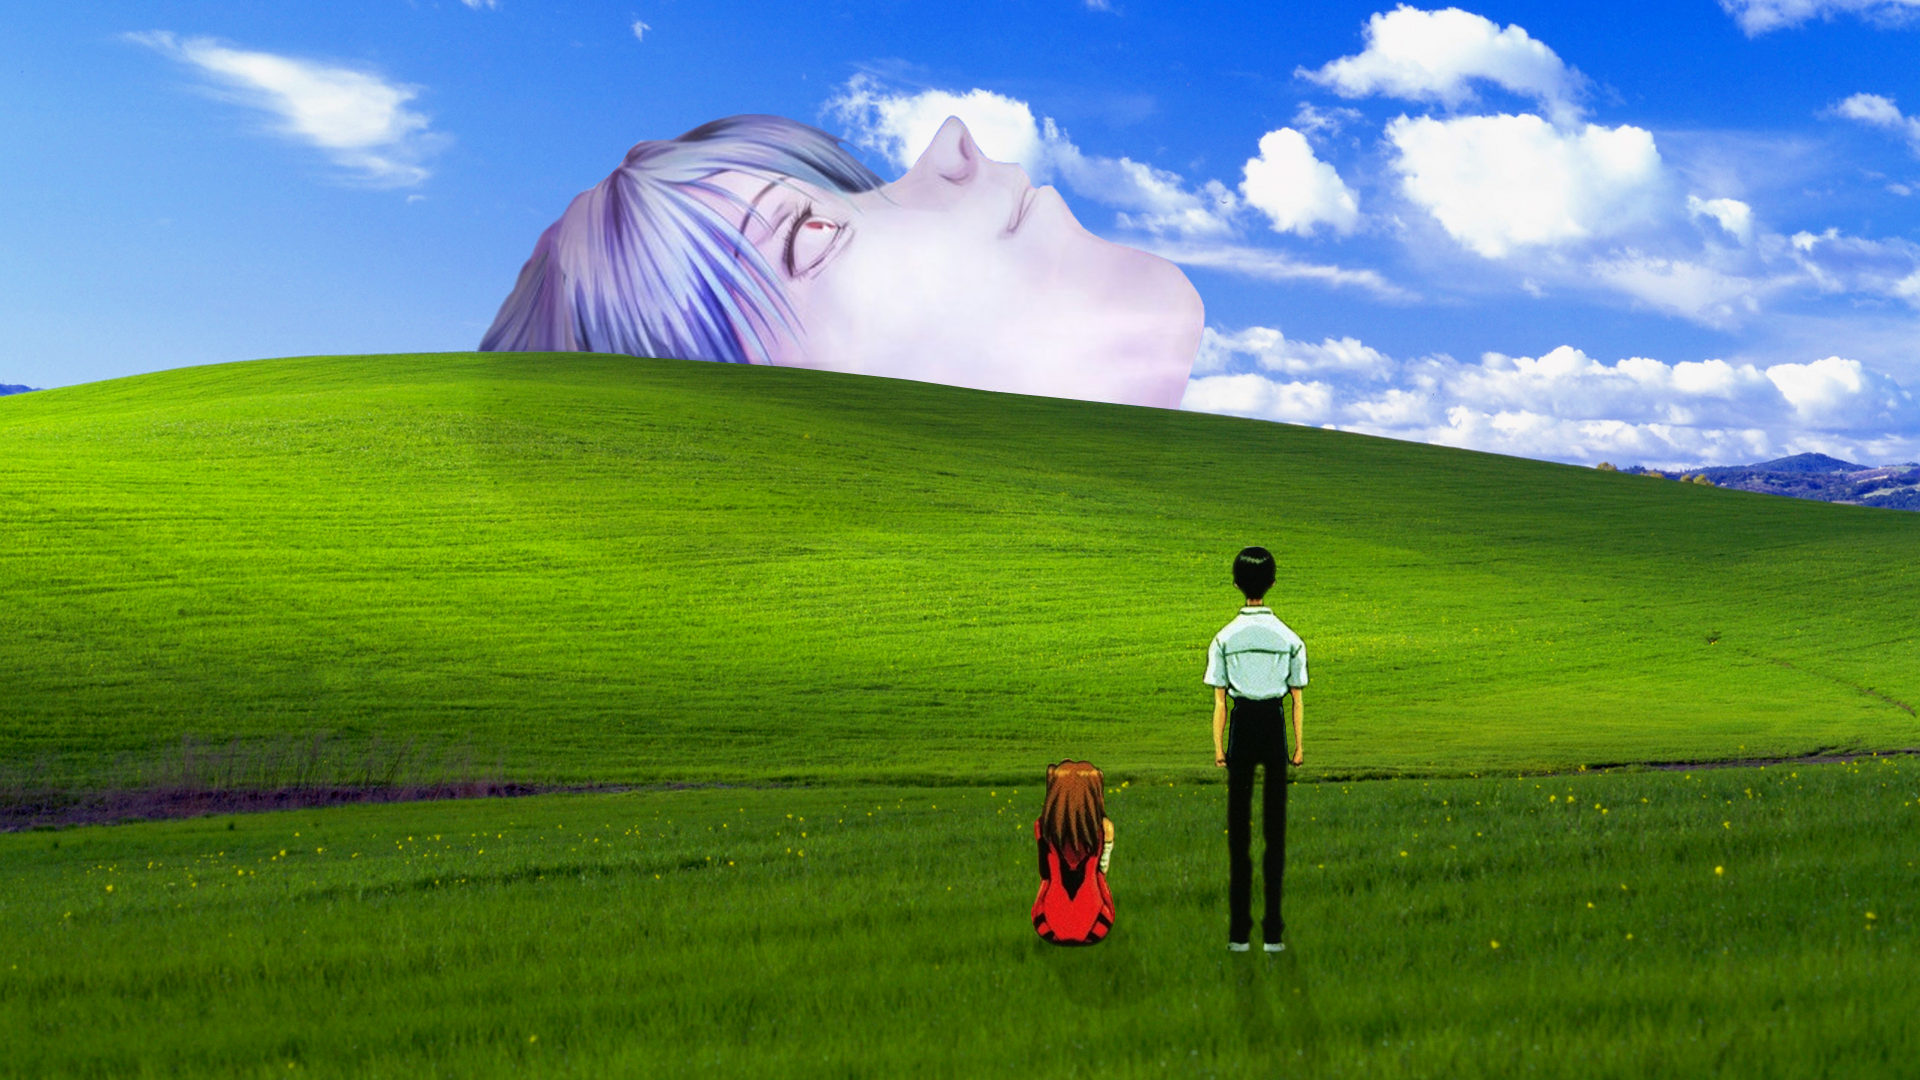 Wallpaper Windows XP Neon Genesis Evangelion by gaythugmemes